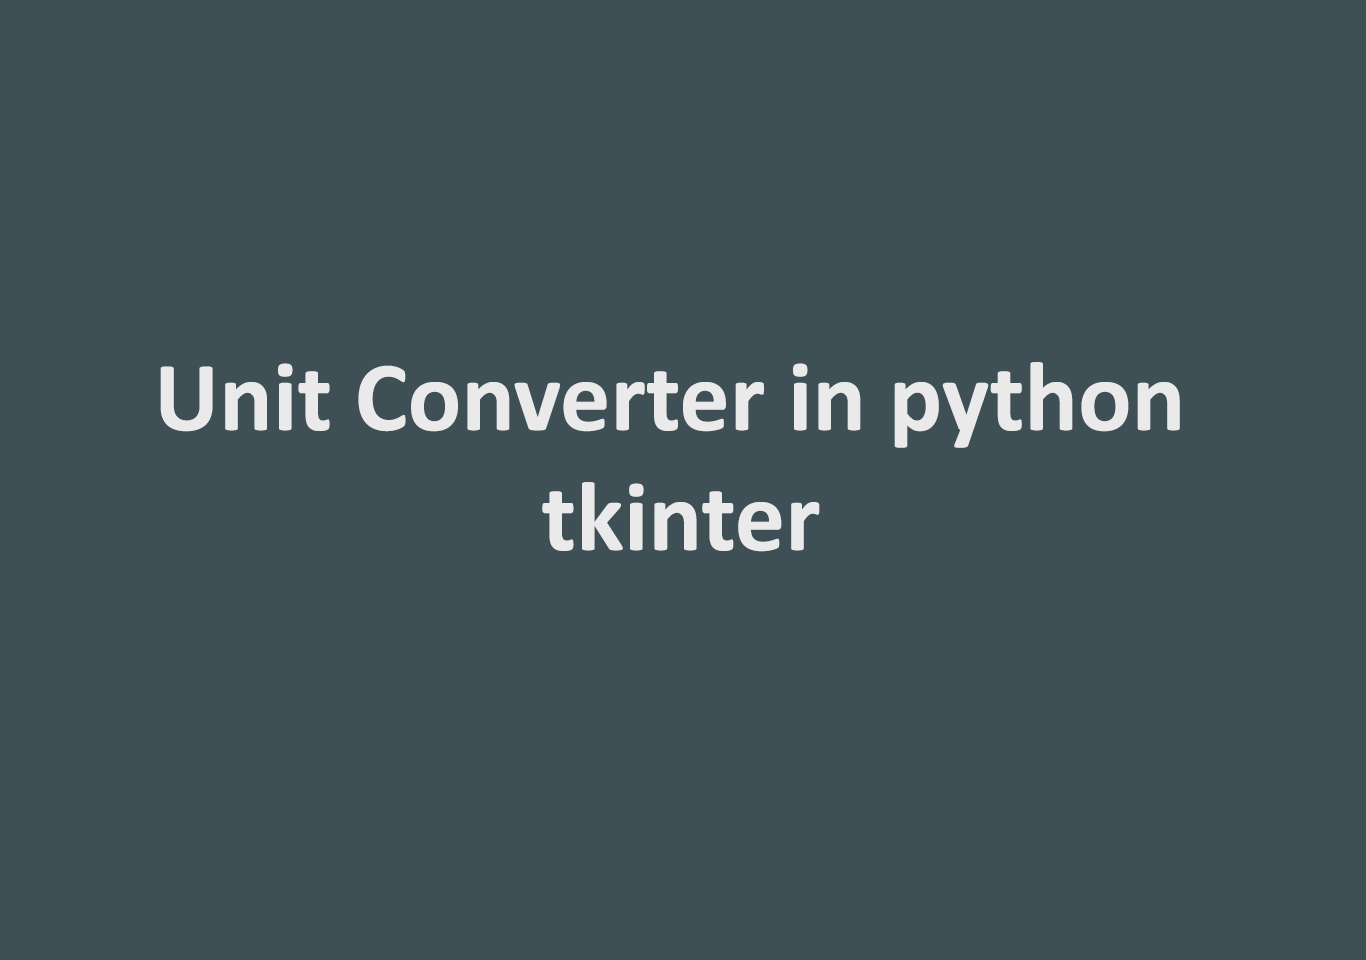 Unit converter in python tkinter